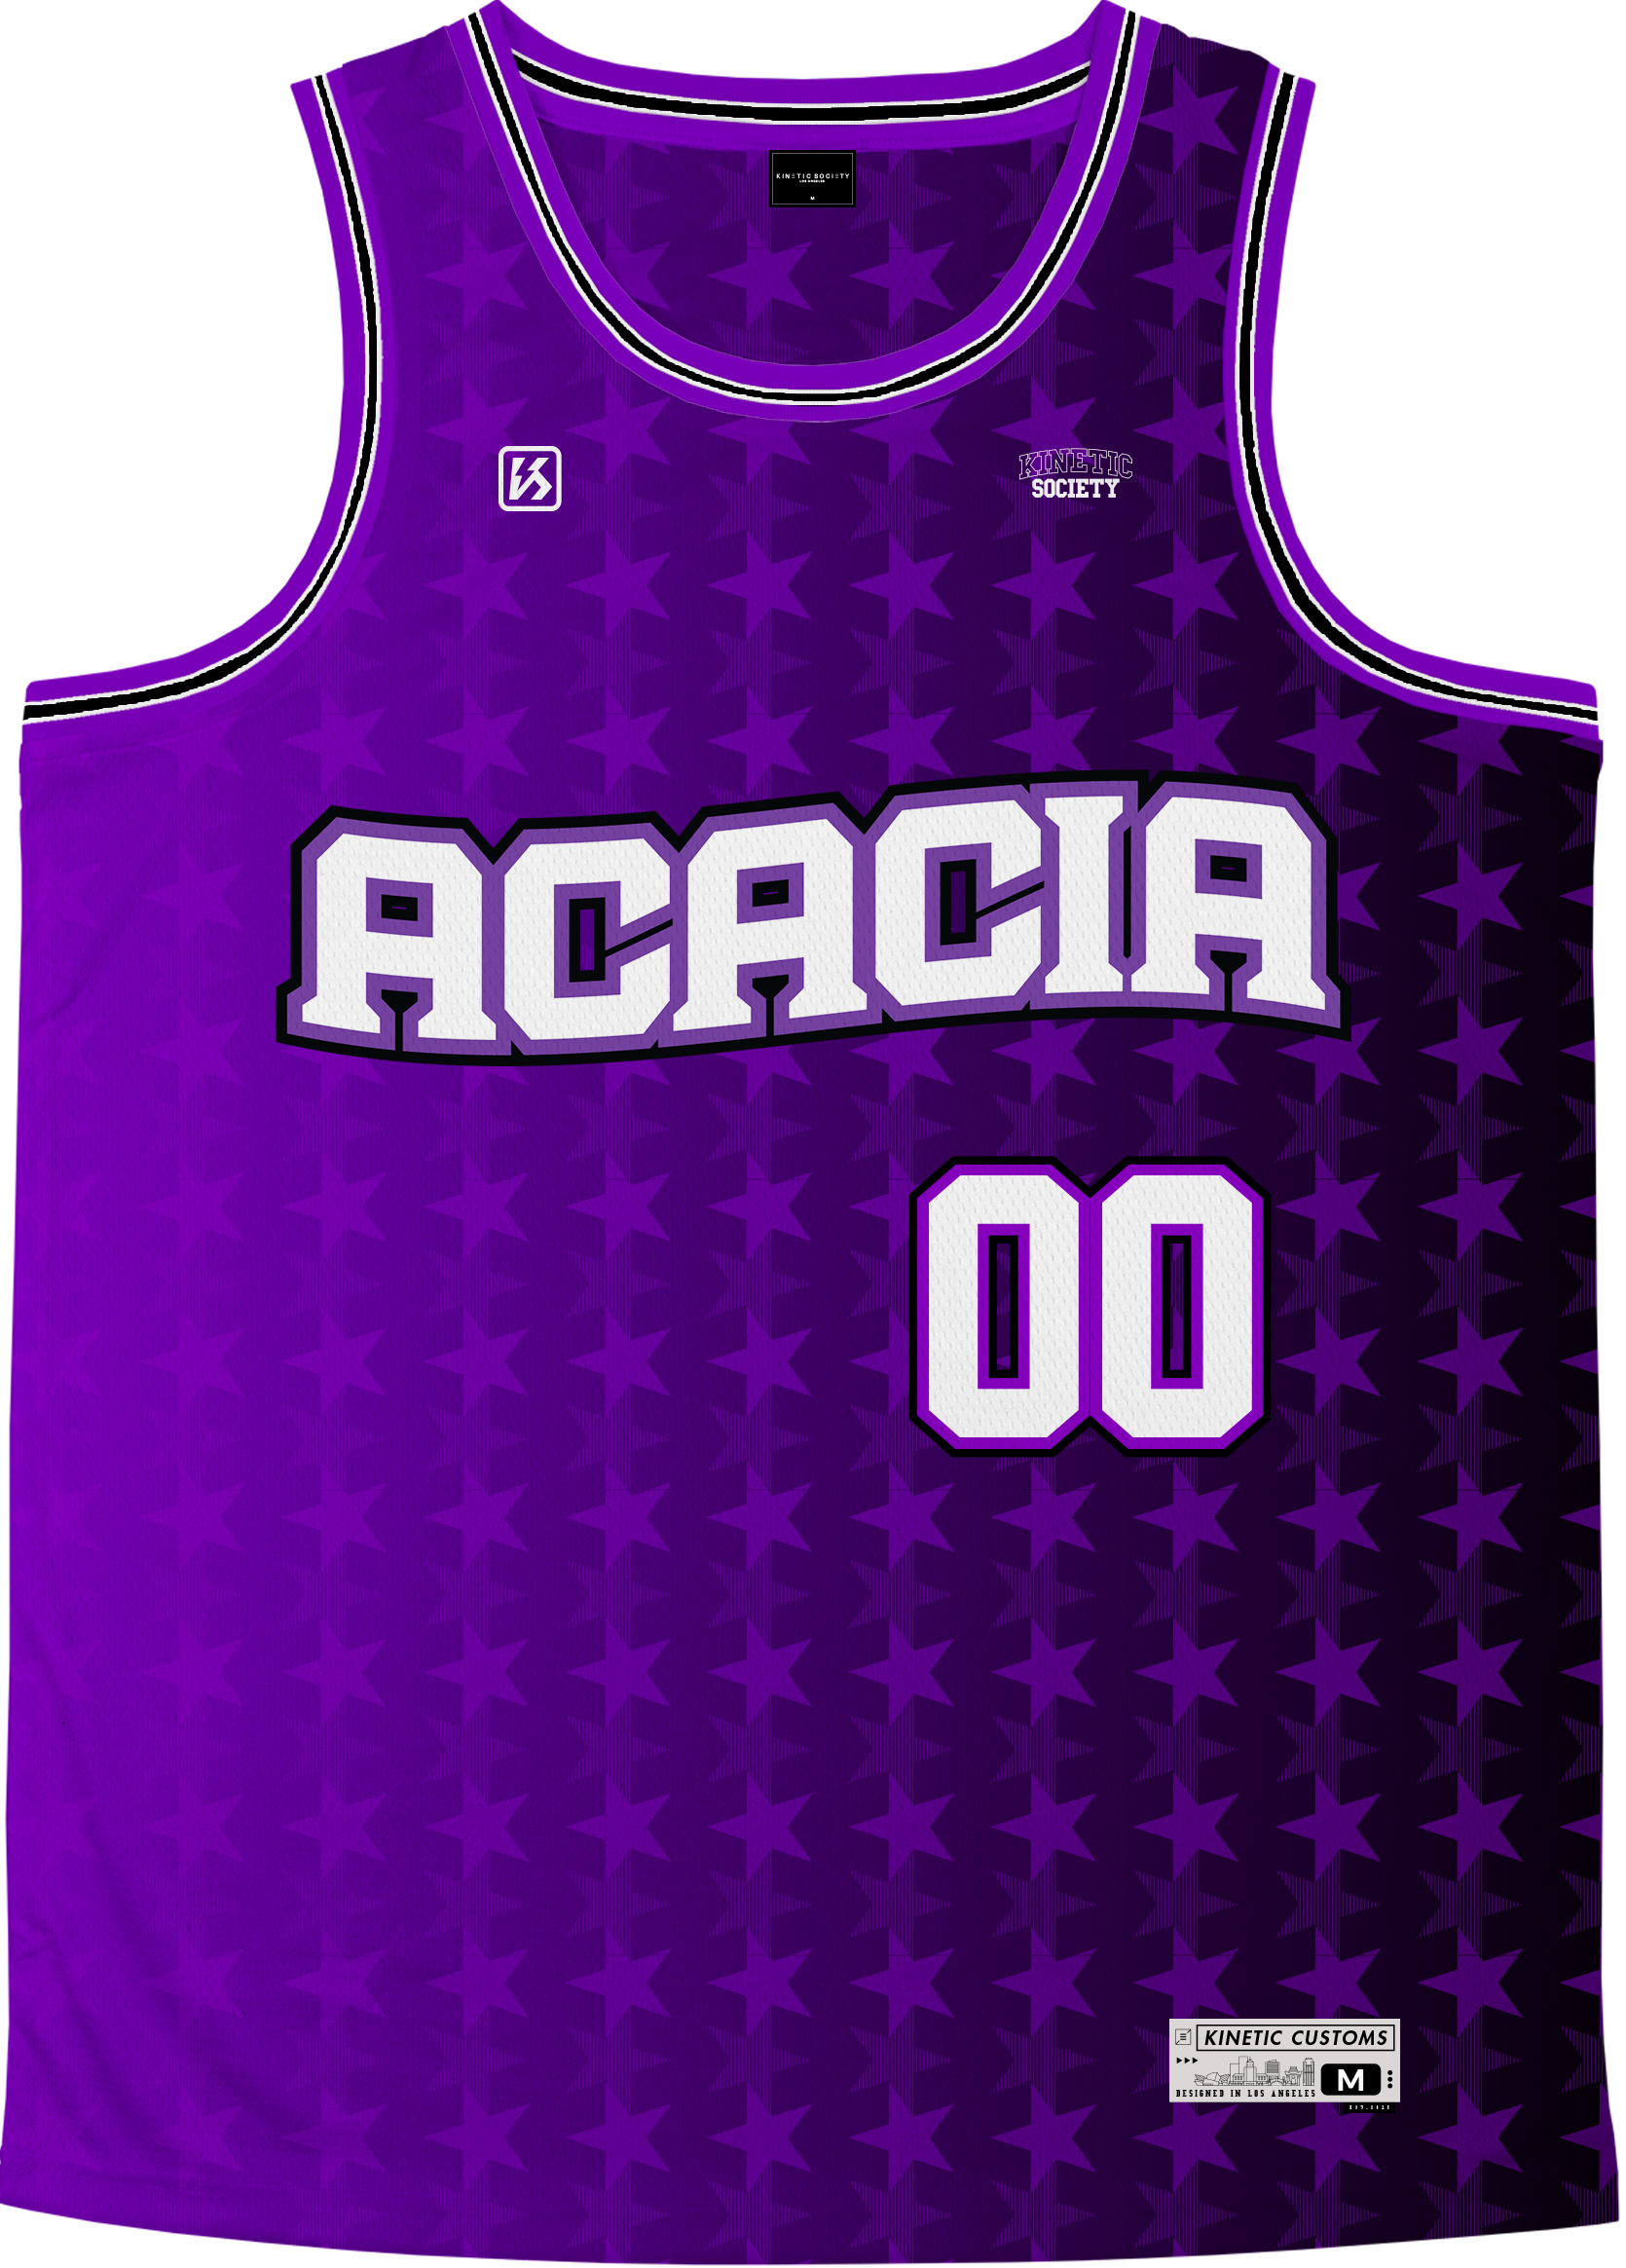 ACACIA - Stars Over Stripes Basketball Jersey